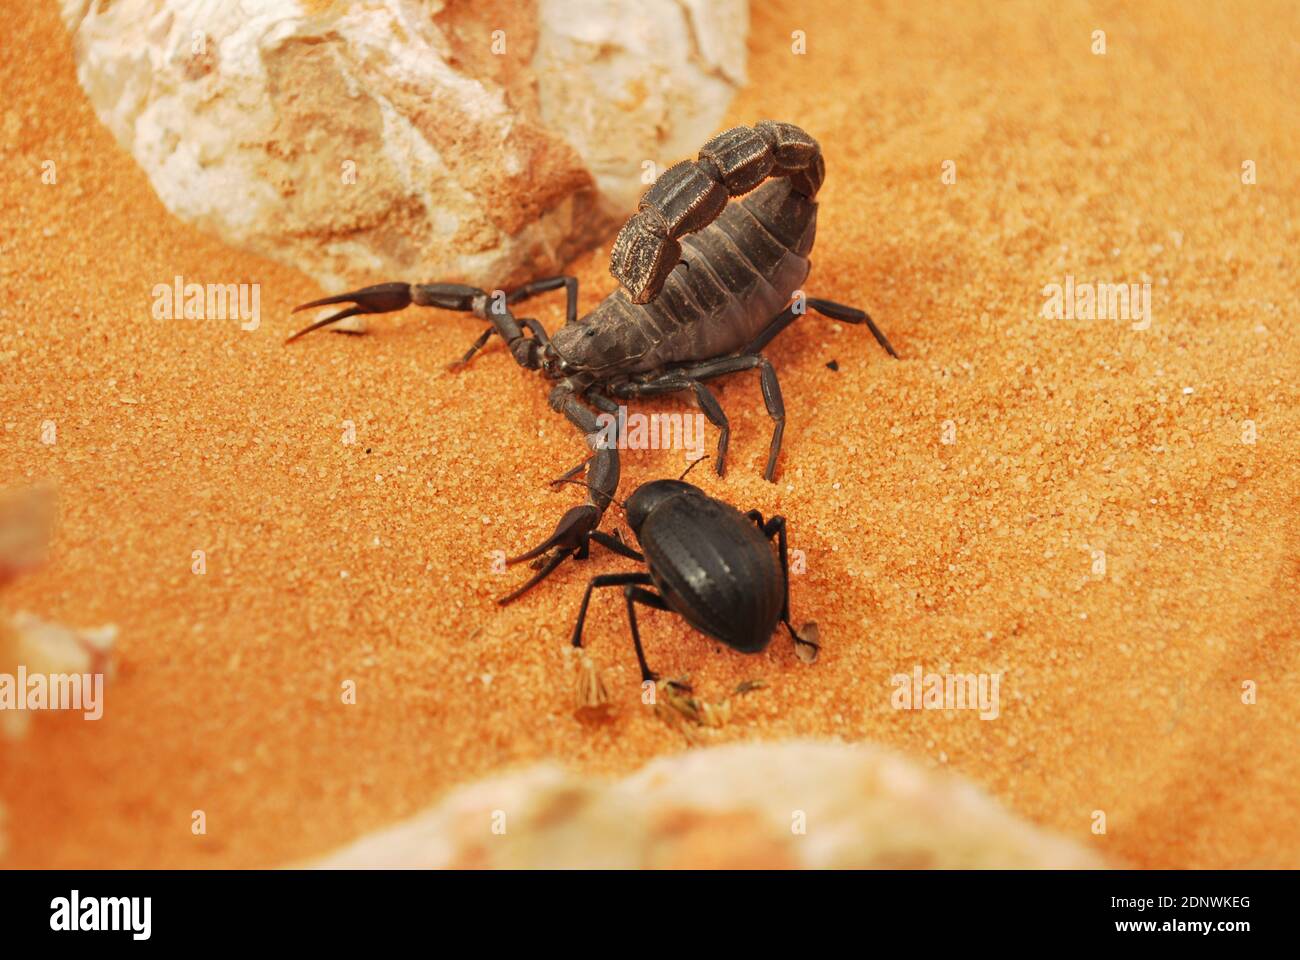 Saudi Arabian desert life Stock Photo